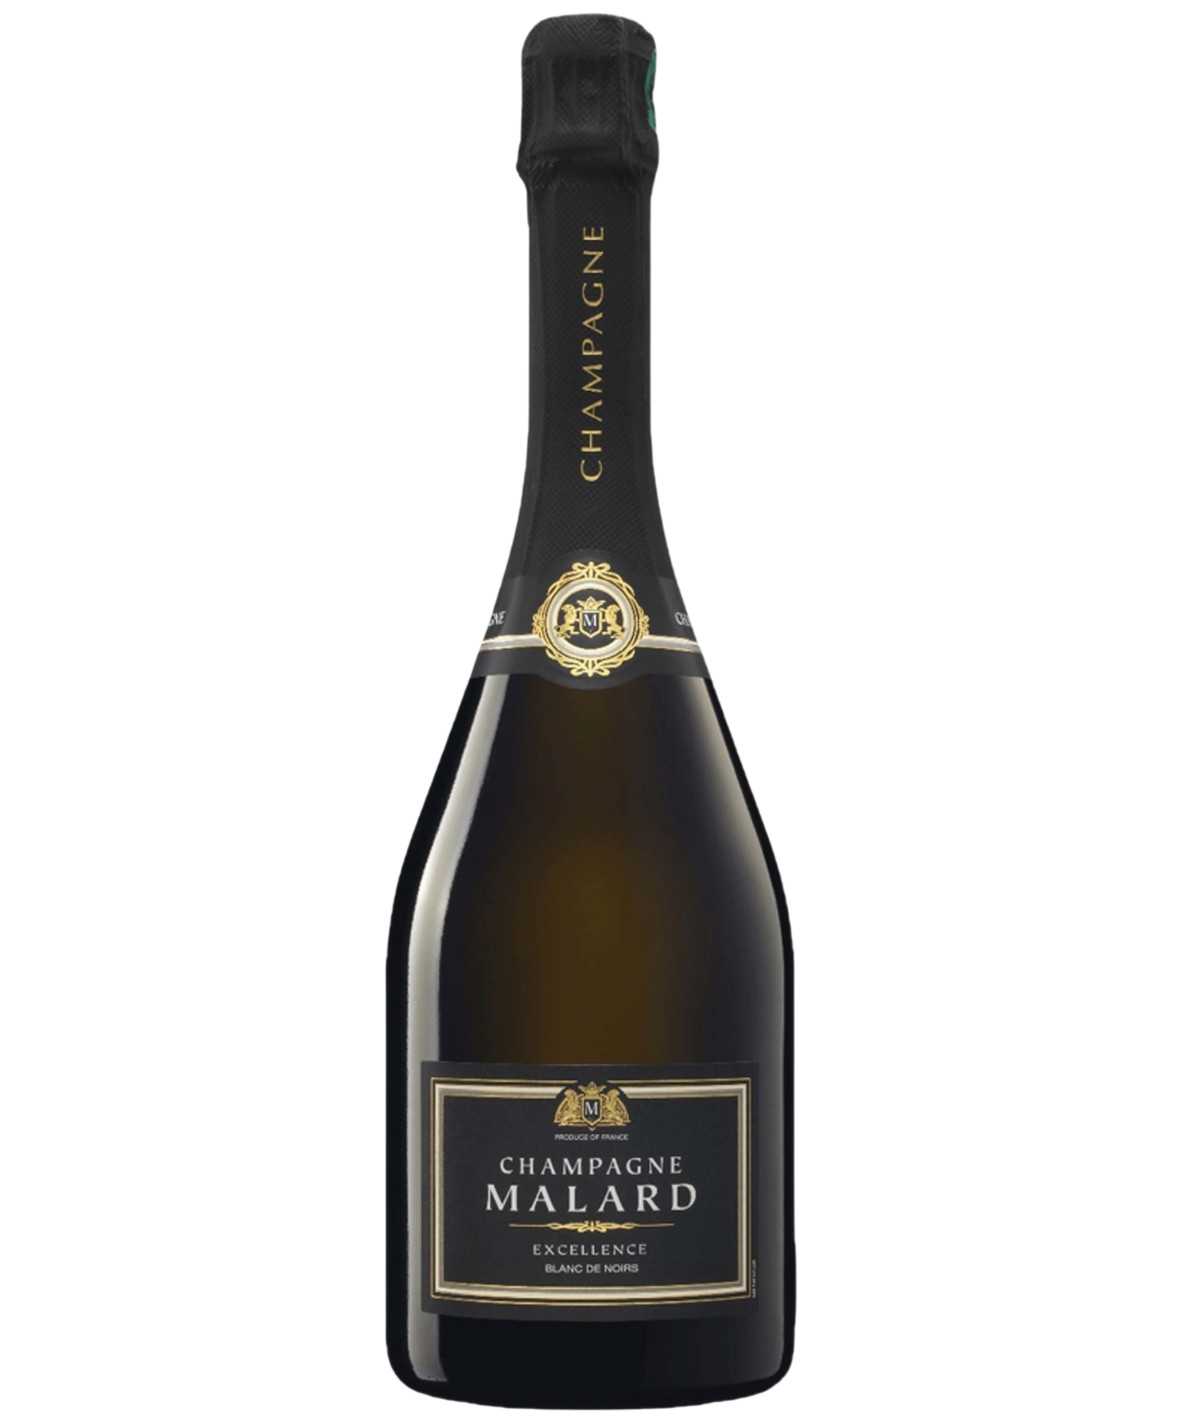 MALARD Champagner Blanc De Noirs Excellence